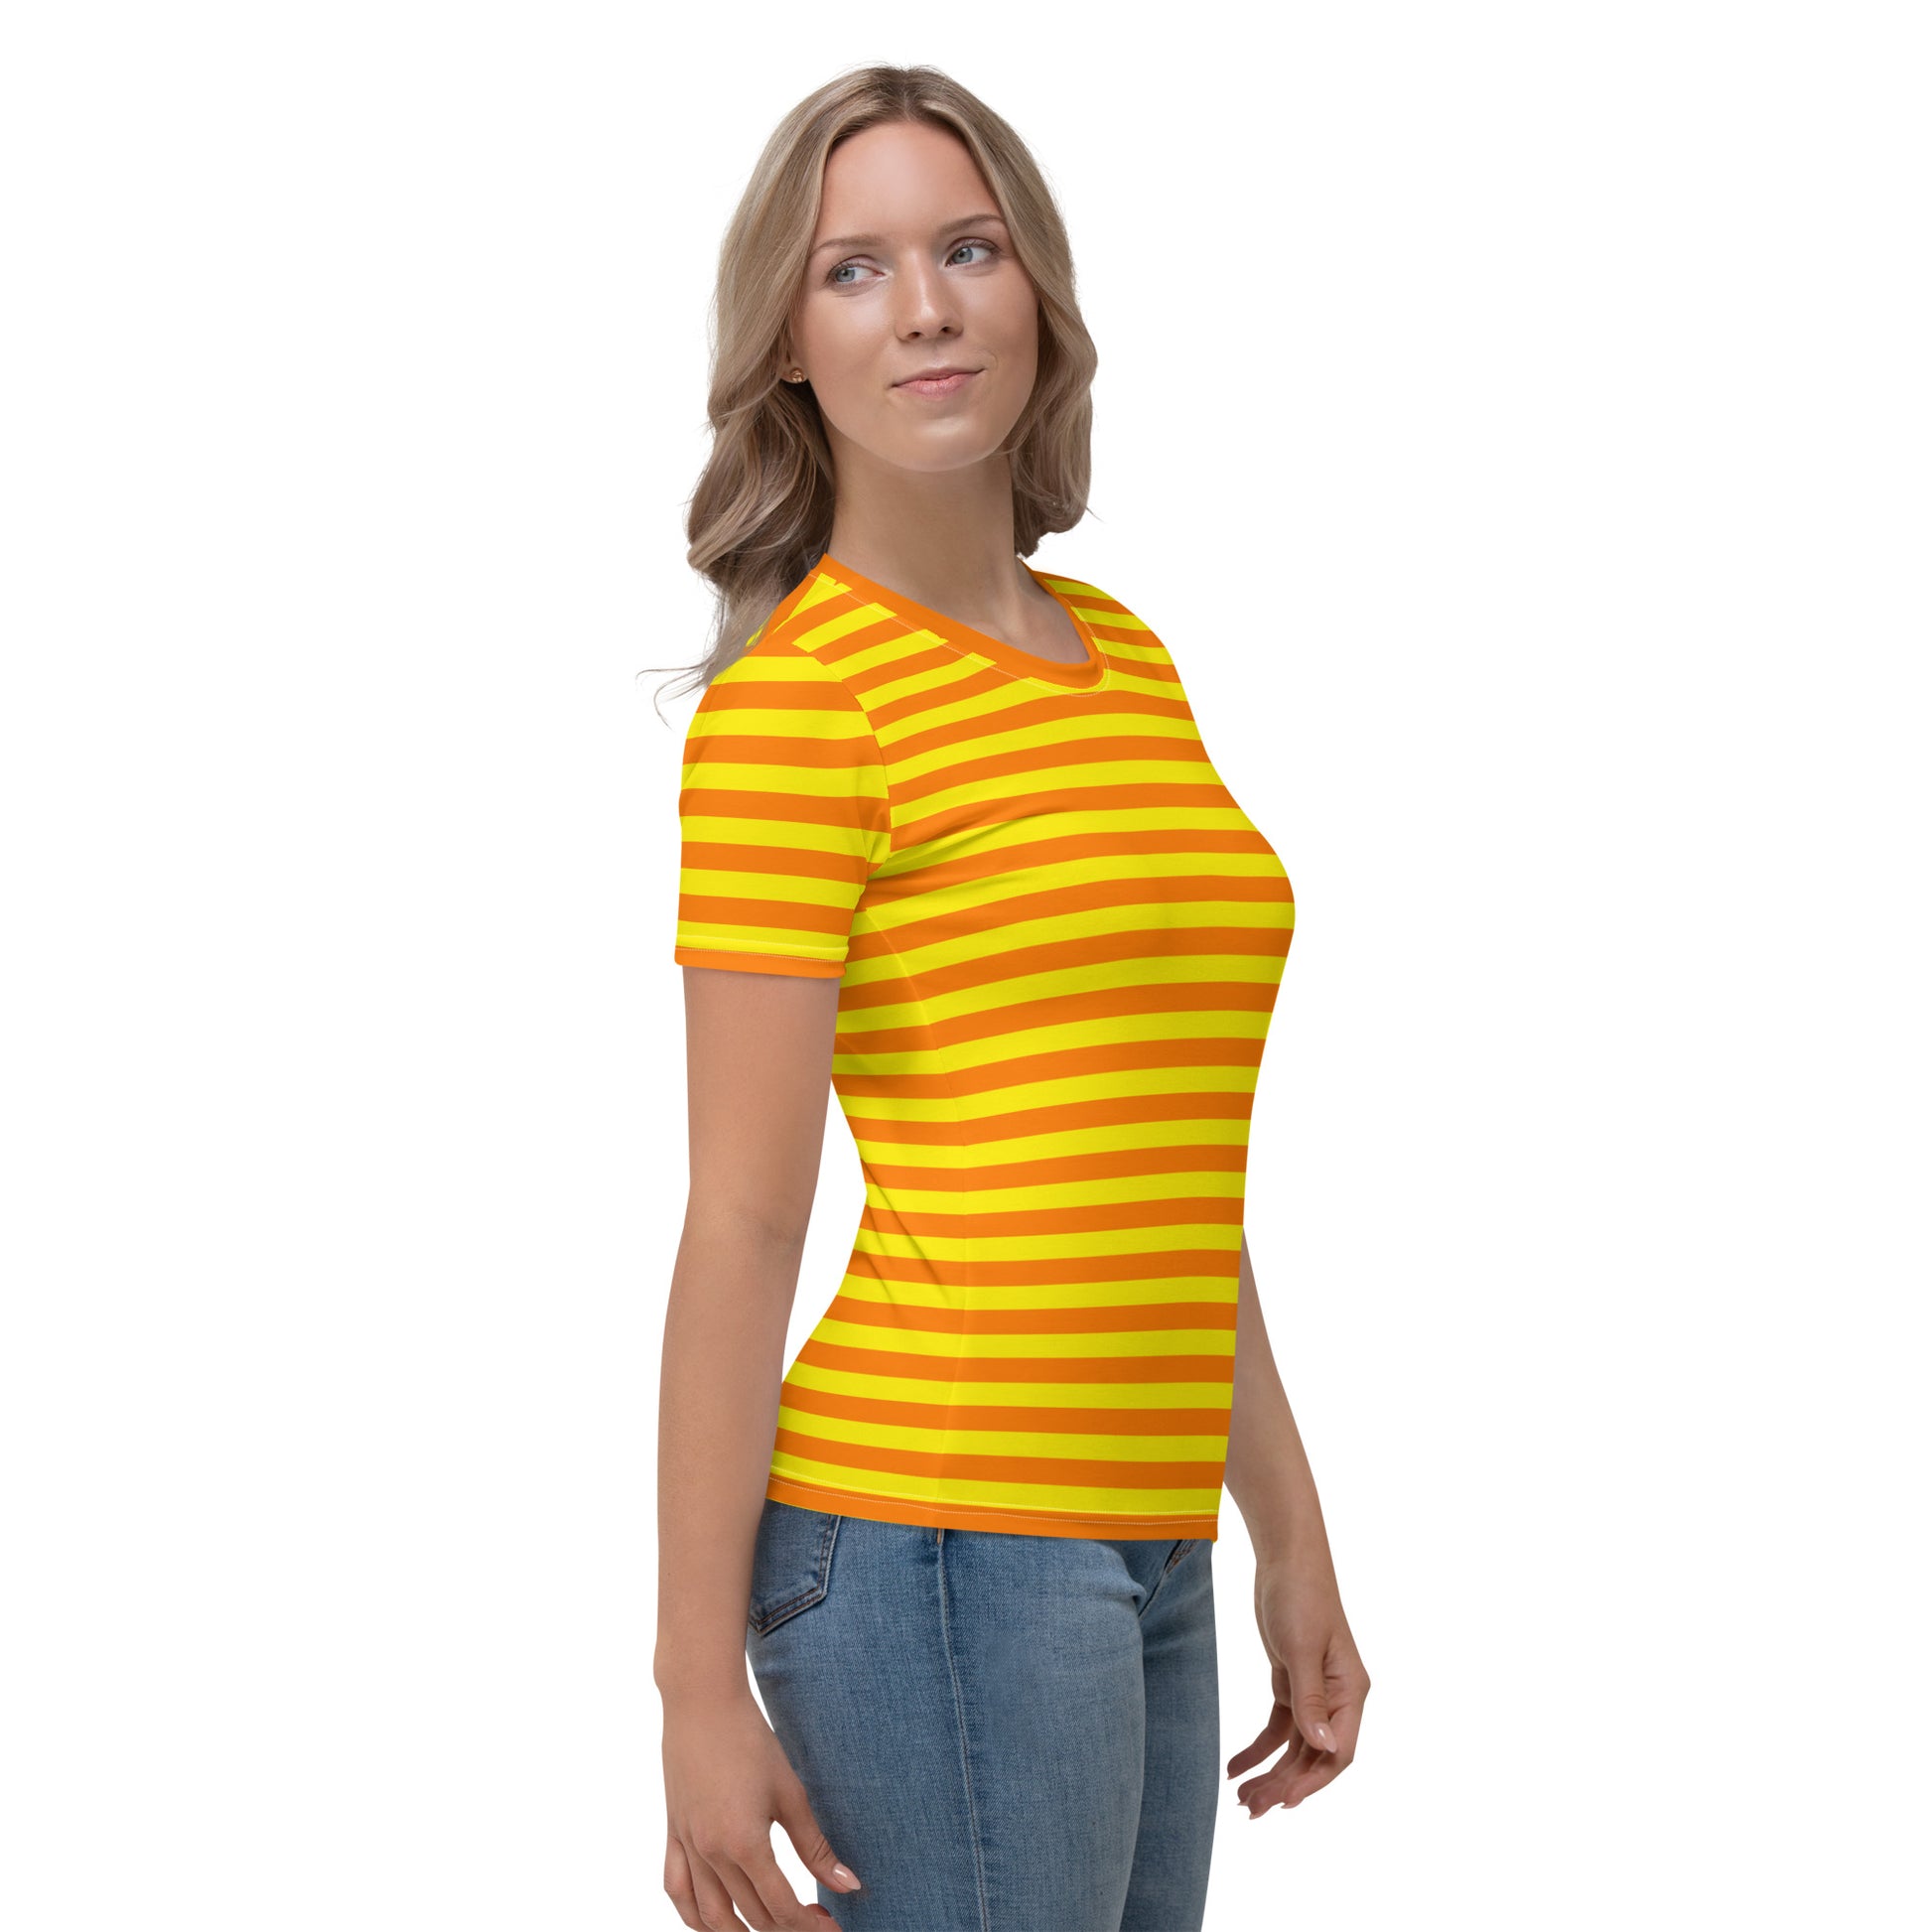 Striped orange and yellow t-shirt